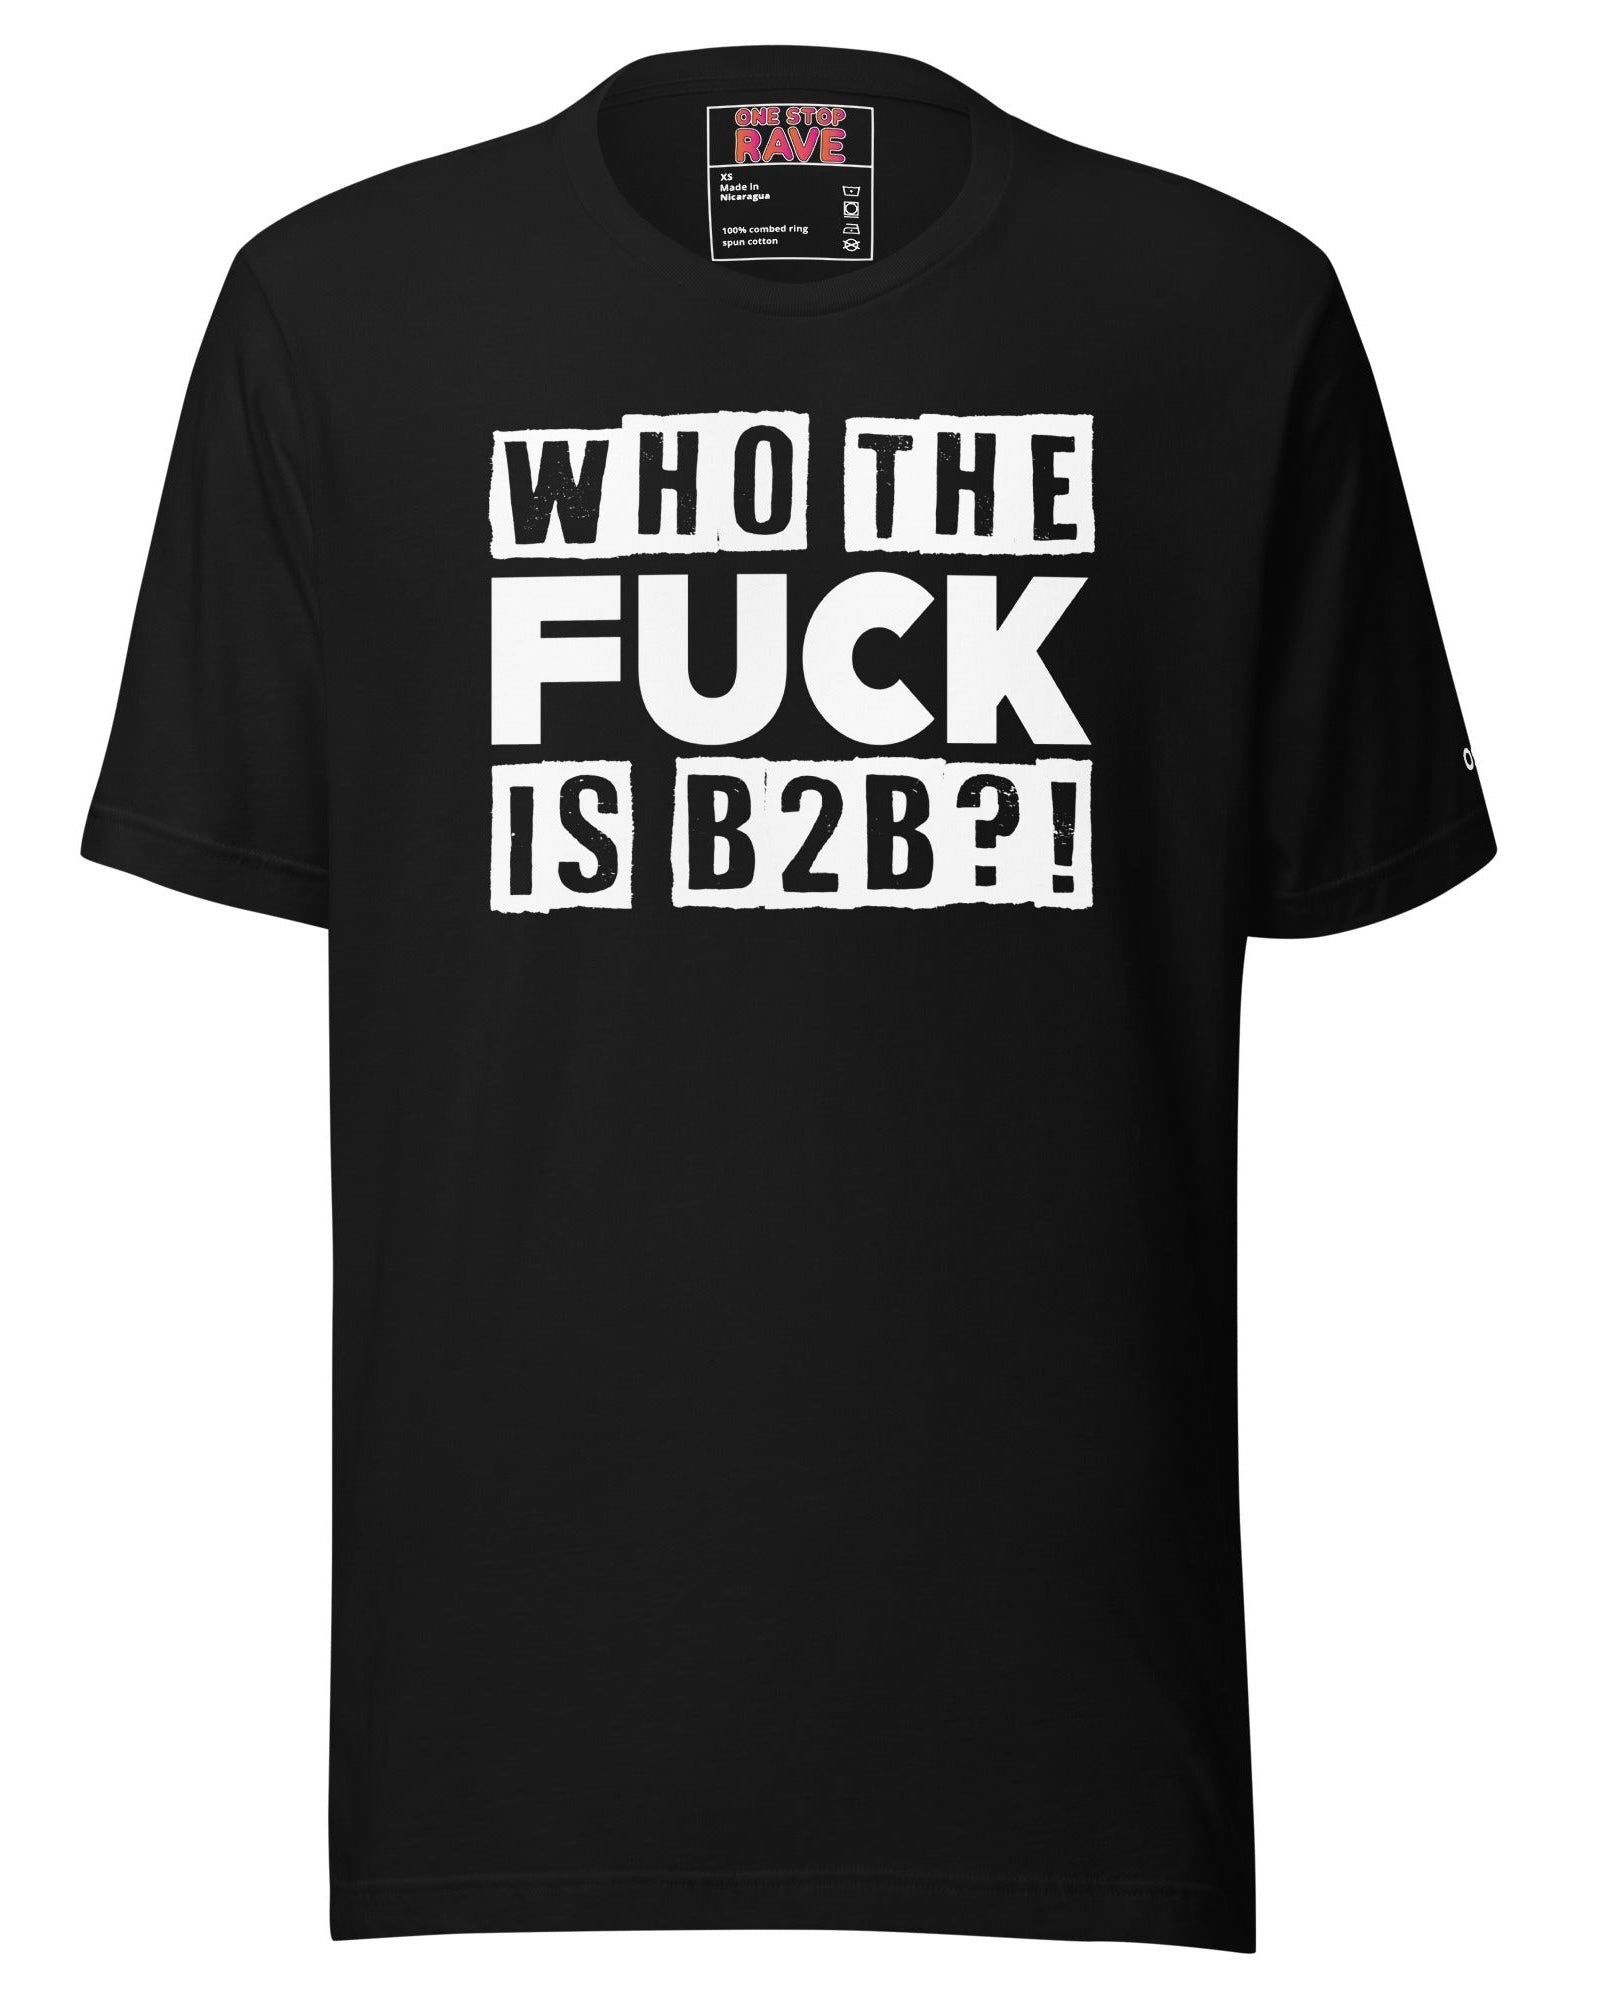 Who TF Is B2B?! T-Shirt